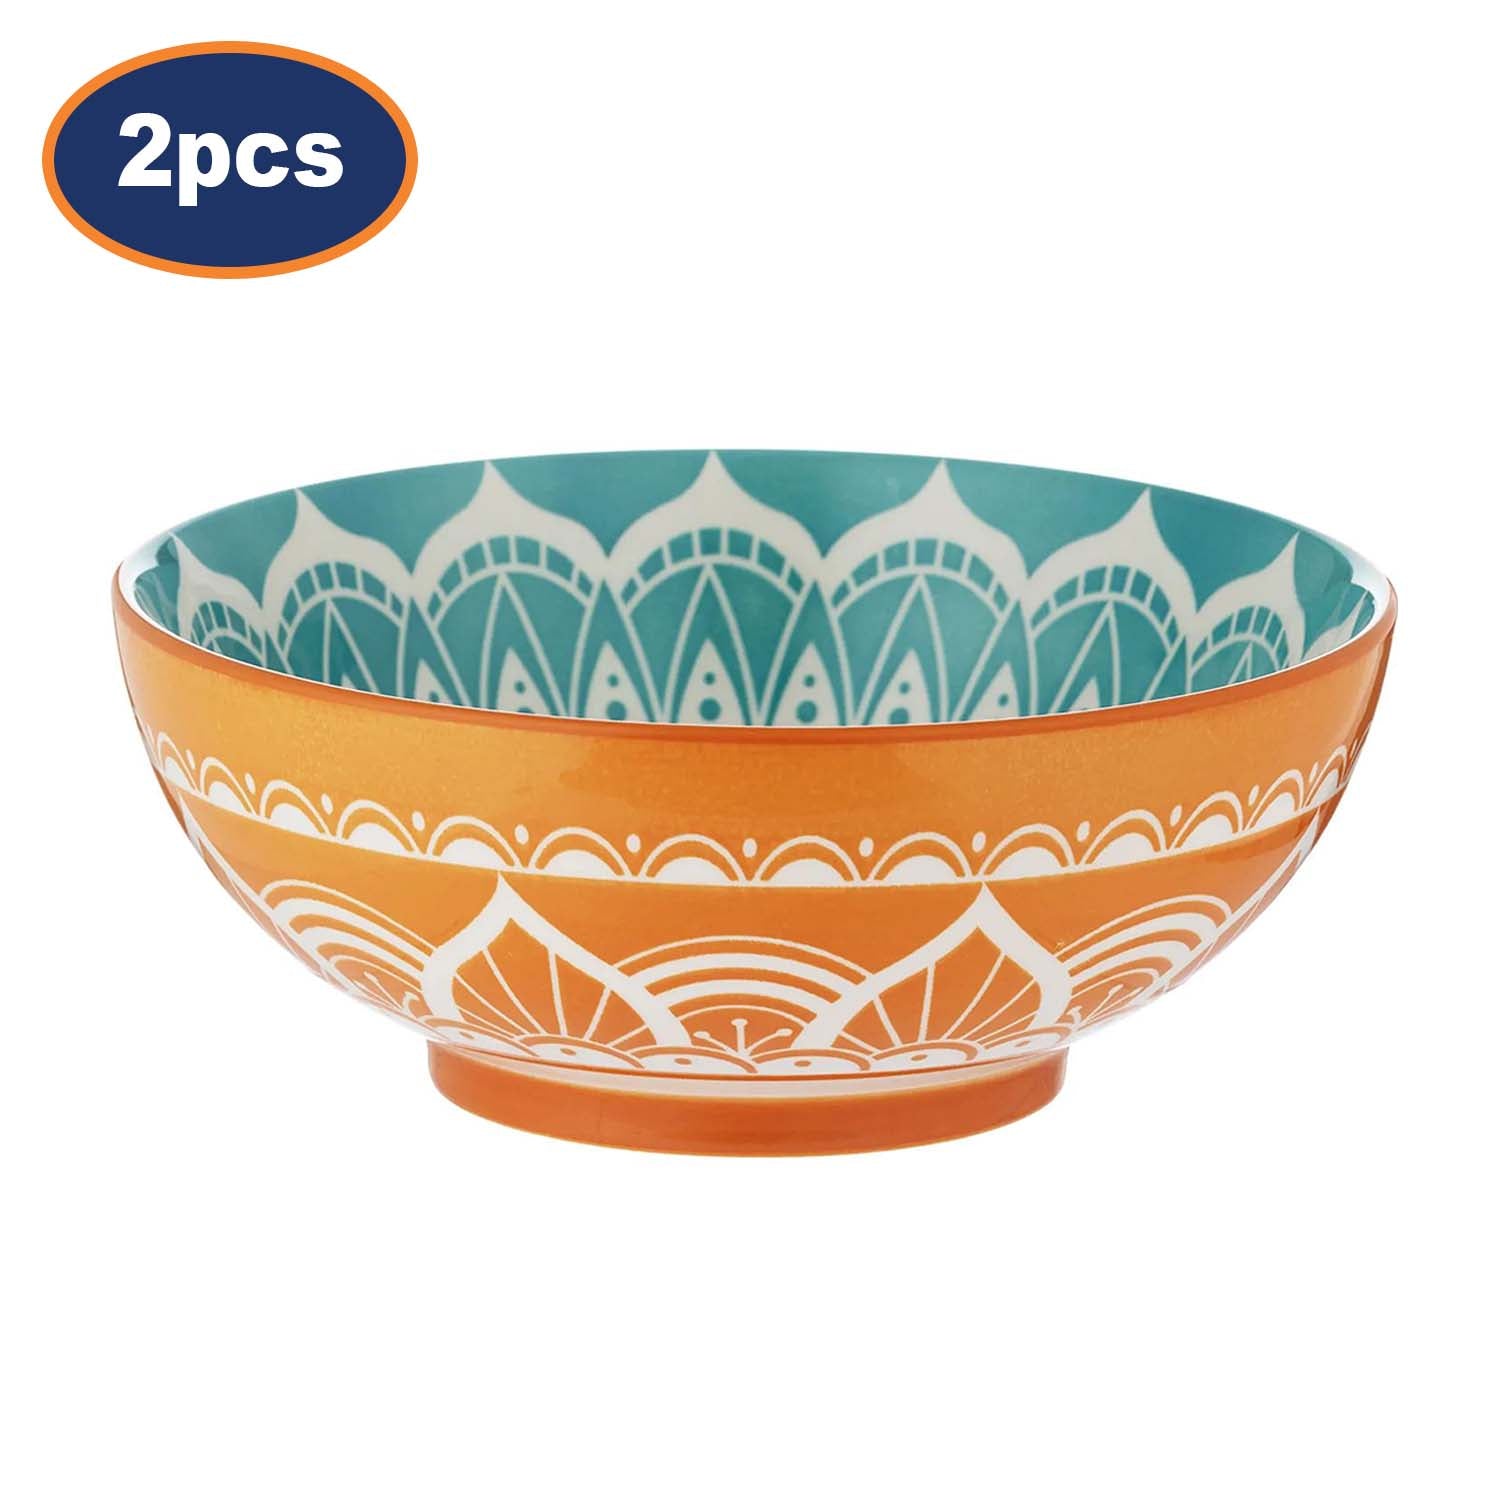 2Pcs World Foods 20cm Green & India Orange Stoneware Serving Bowls